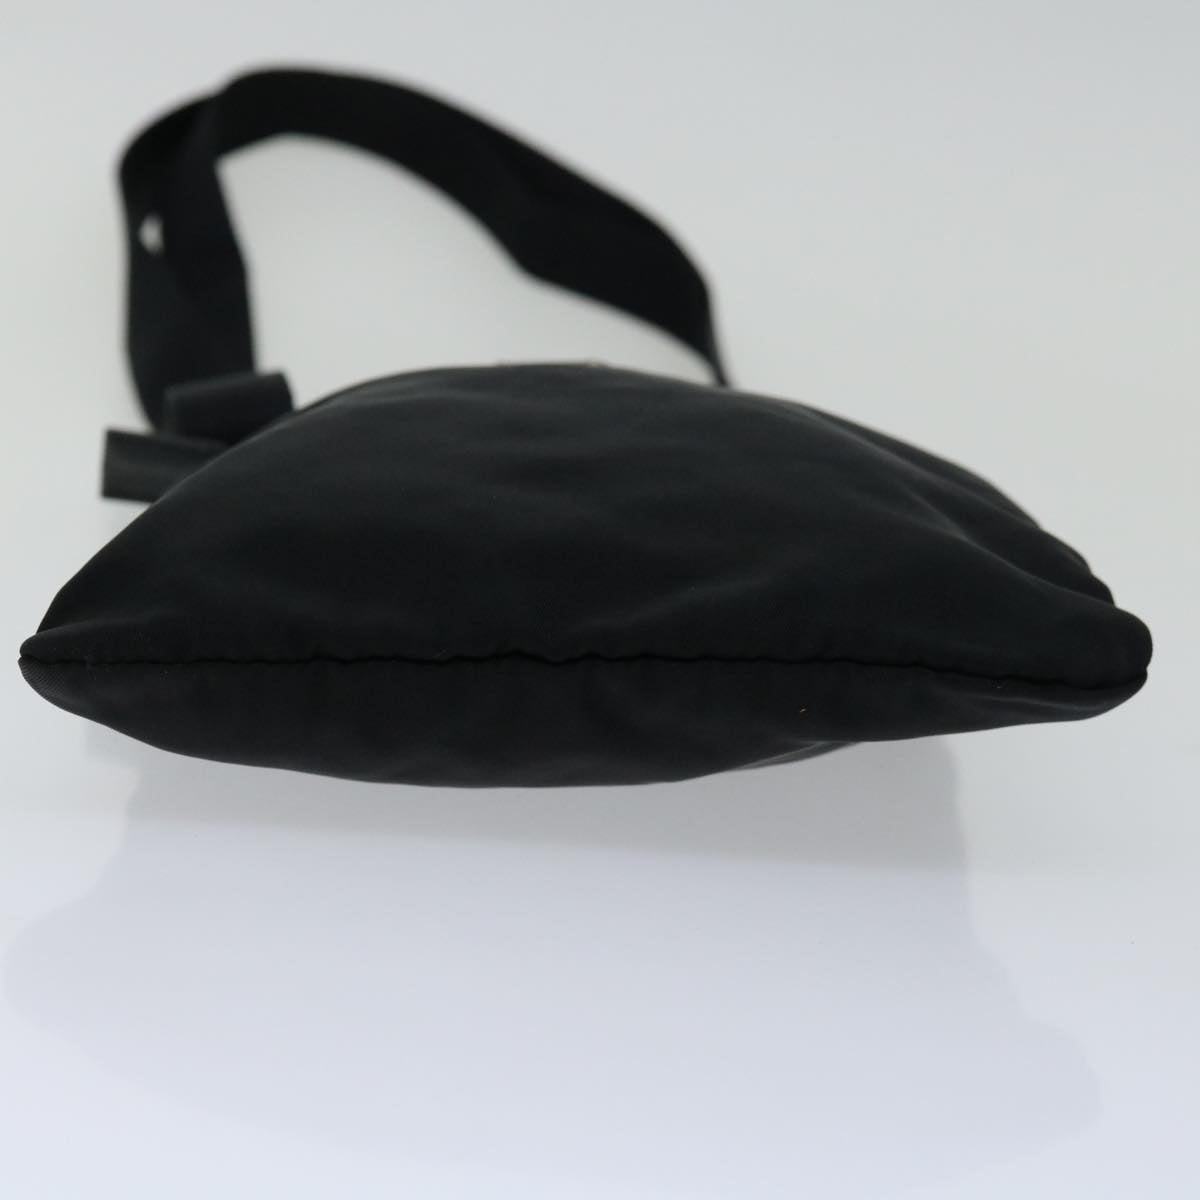 PRADA Shoulder Bag Nylon Black Auth bs13137